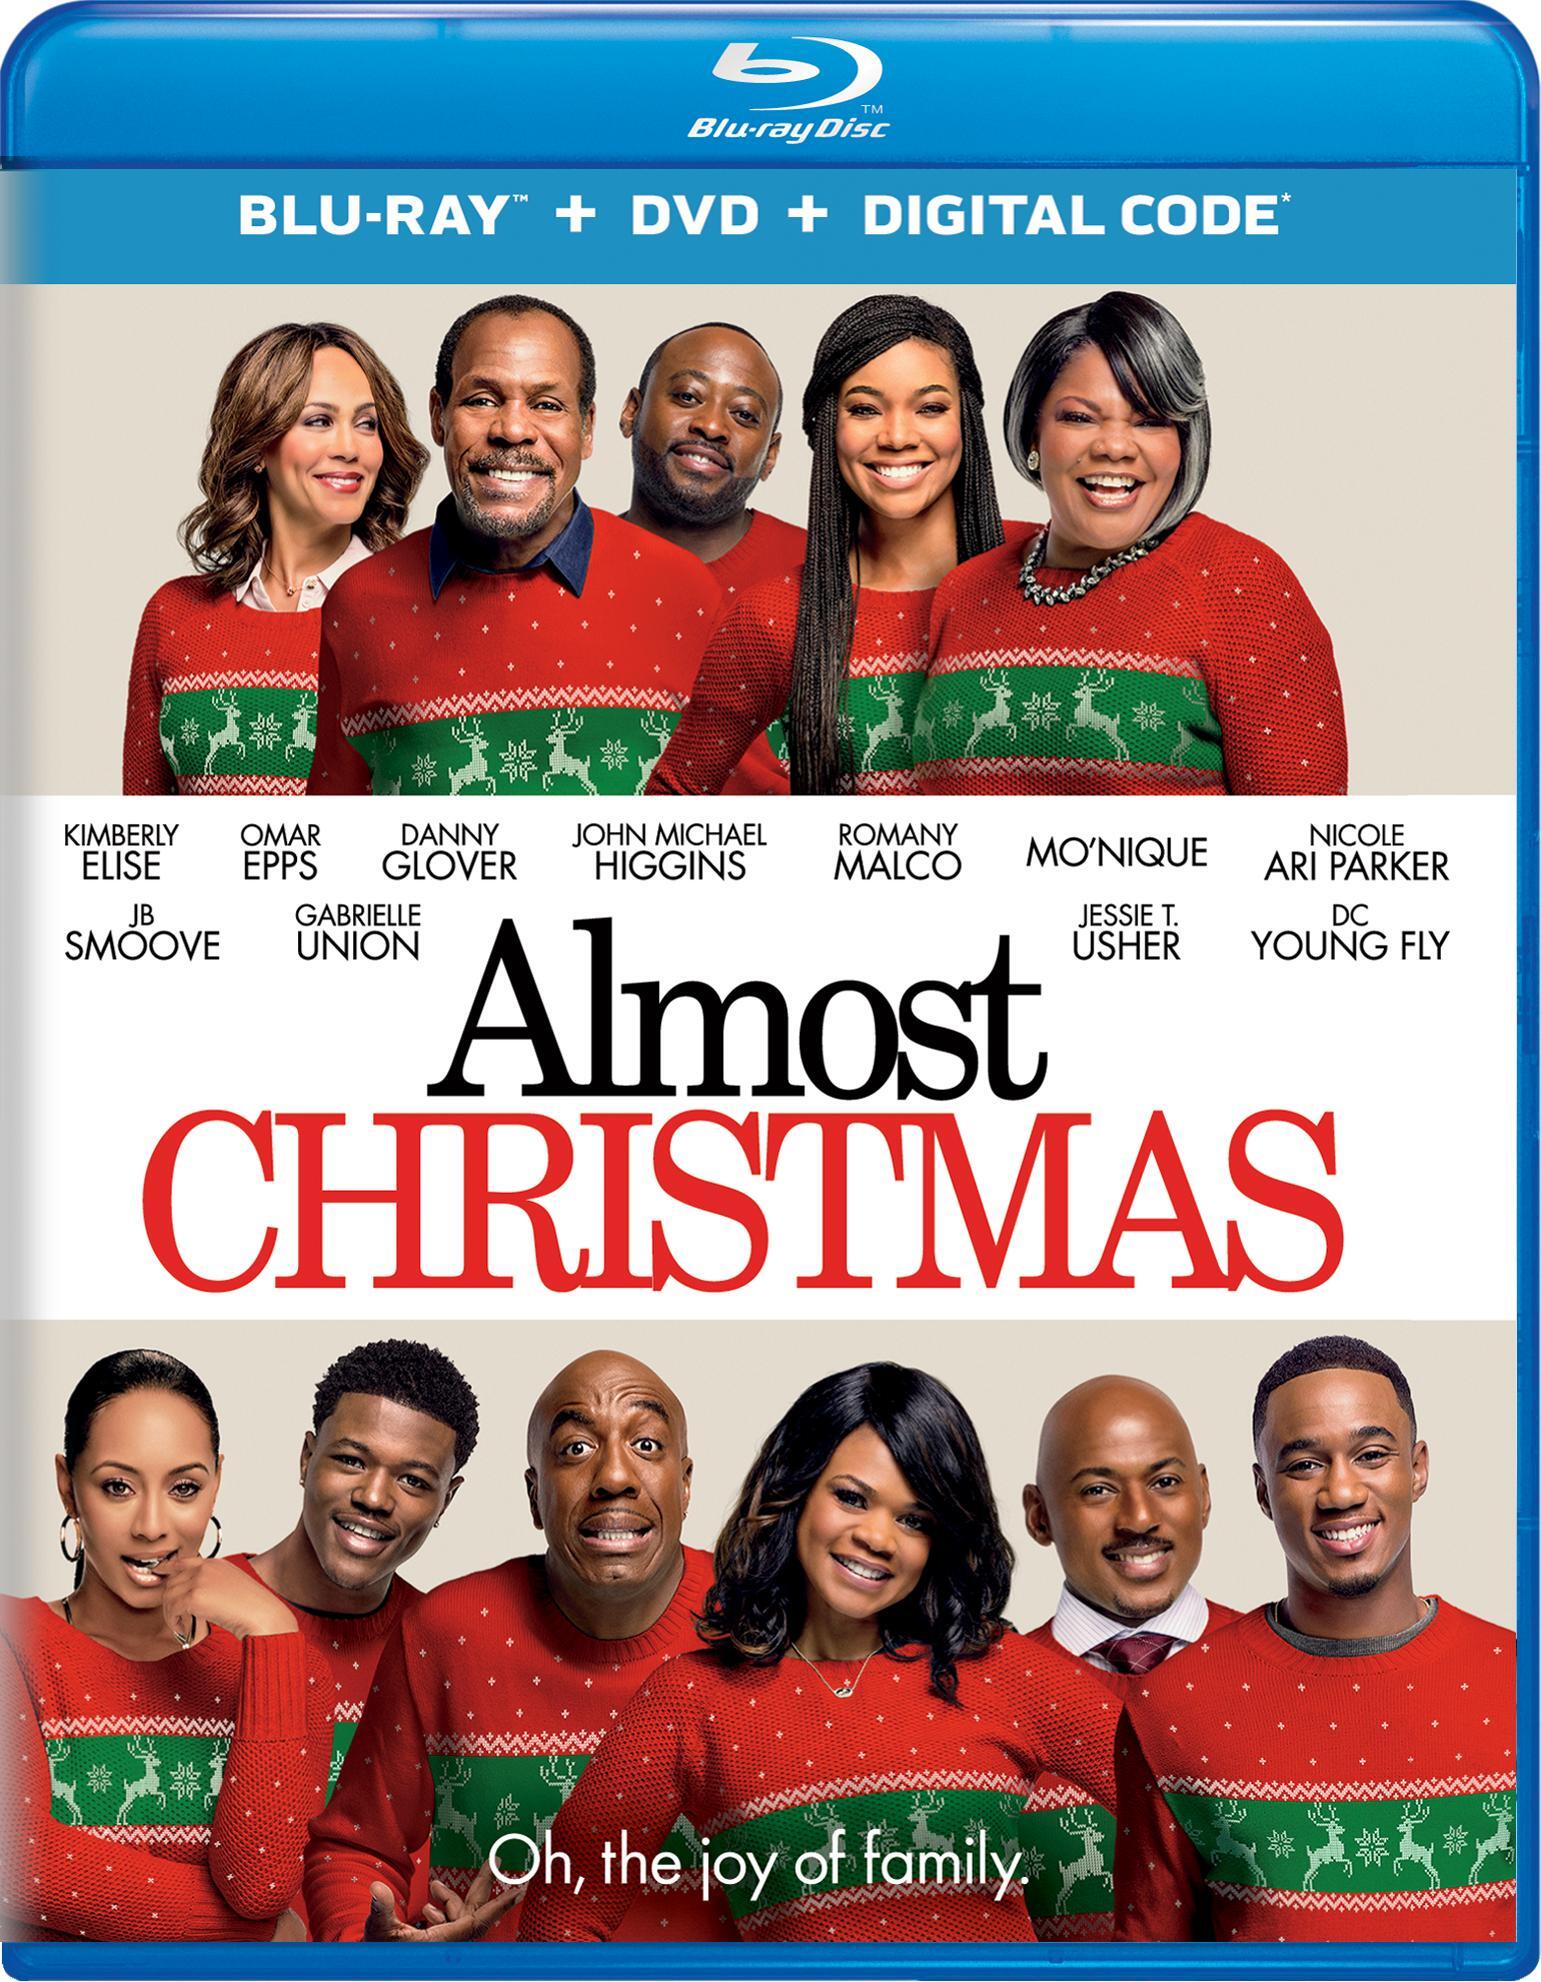 Almost Christmas (DVD + Digital) - Blu-ray [ 2016 ]  - Comedy Movies On Blu-ray - Movies On GRUV